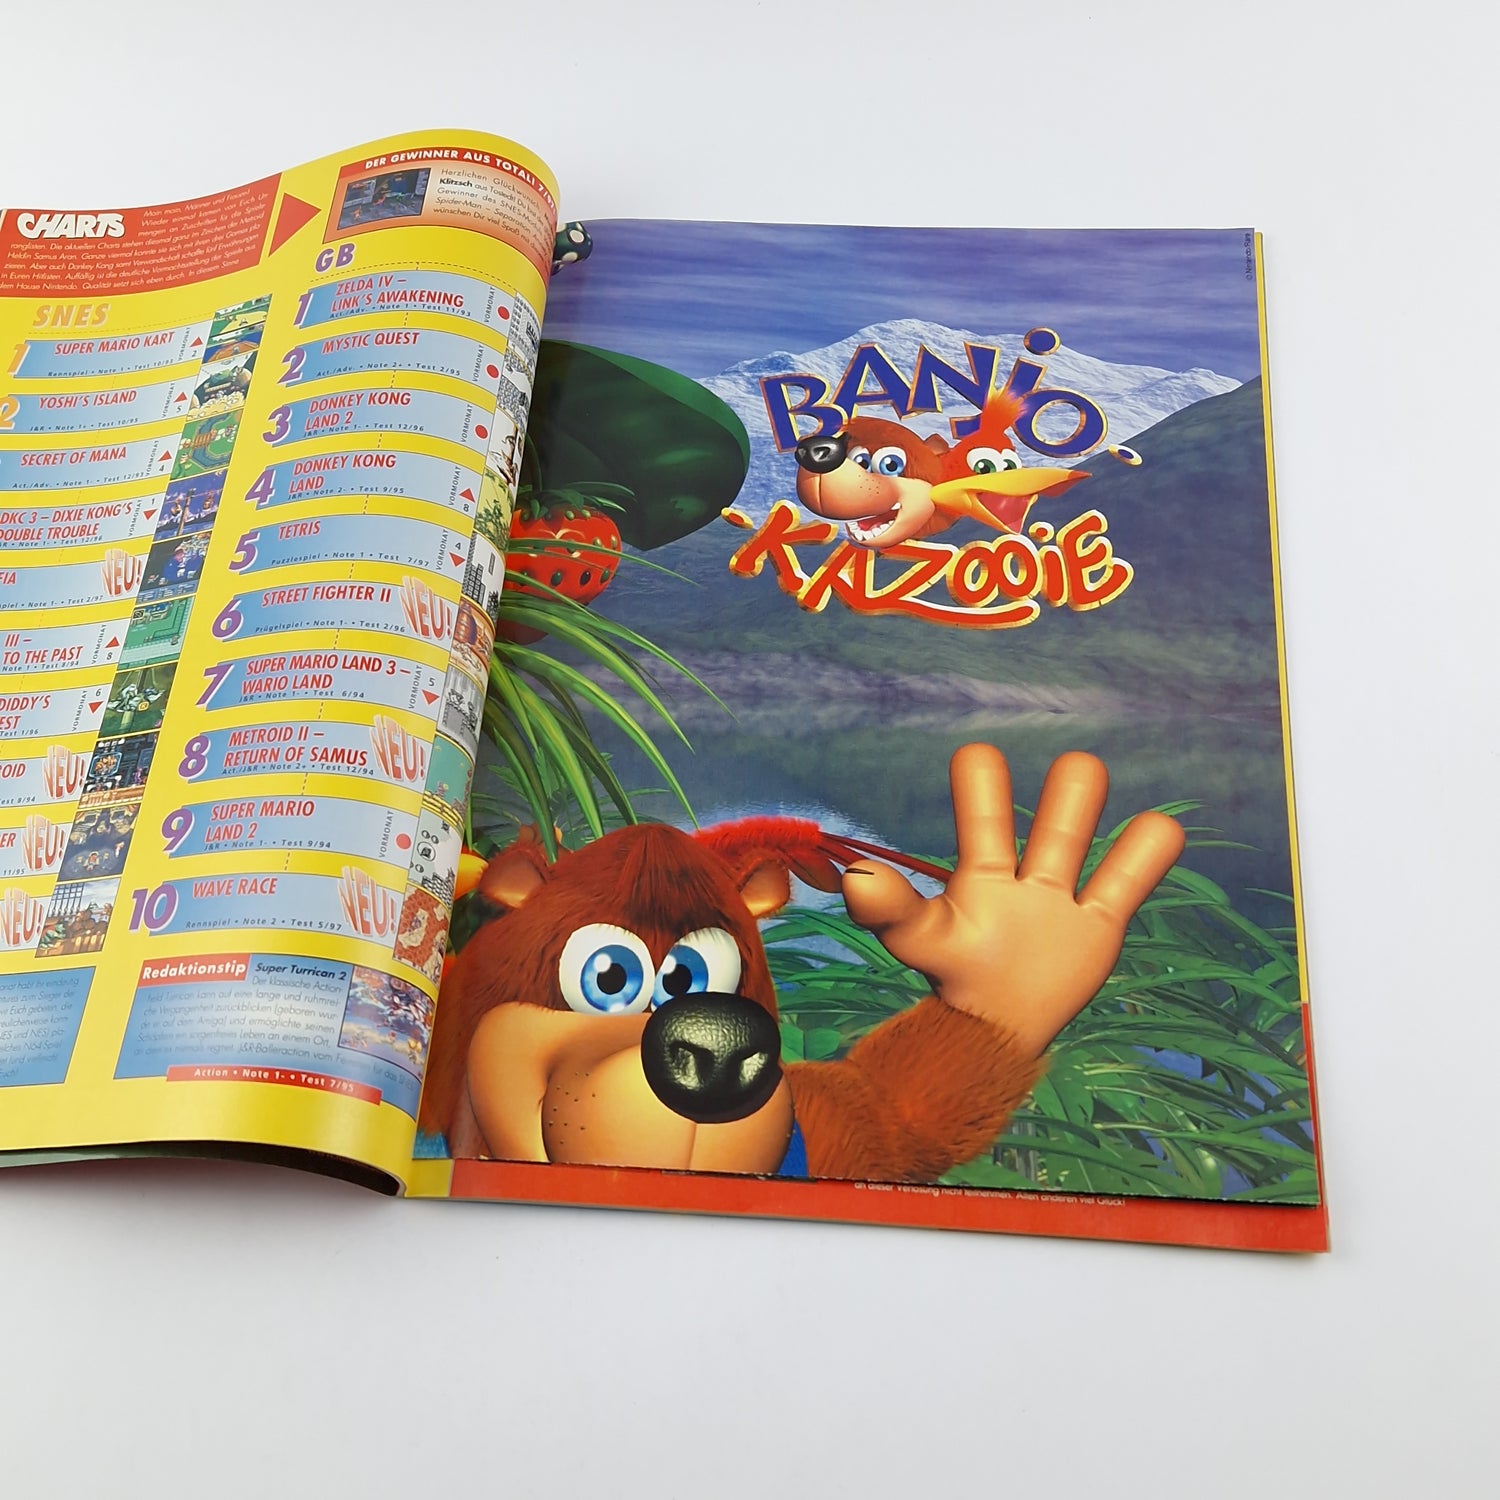 100% Nintendo TOTAL! Magazin : Banjo Kazooie - 8/97 August Zeitschrift Poster